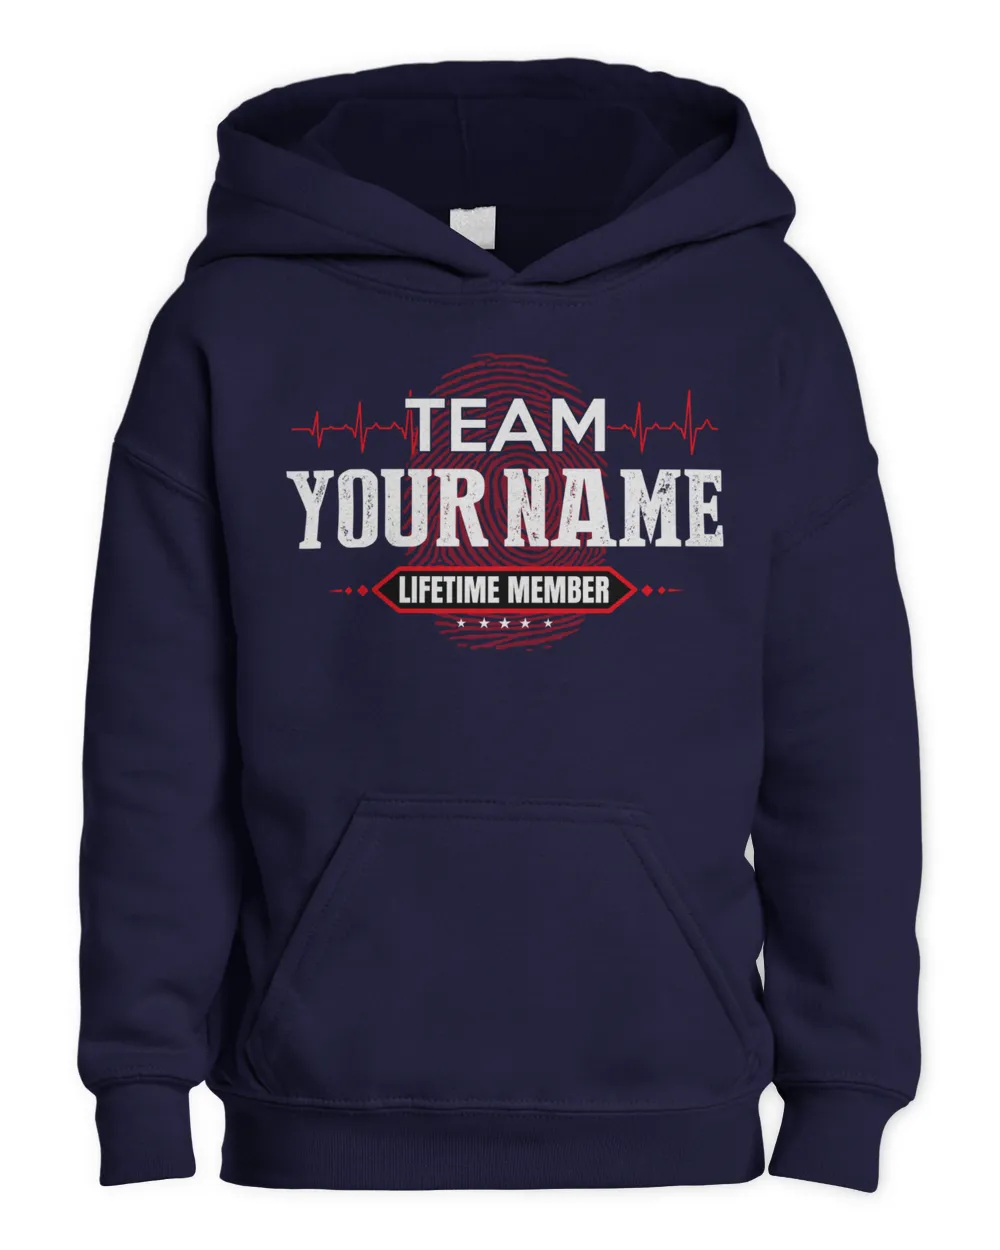 Team YOUR NAME. Lifetime Member. Create custom t-shirts